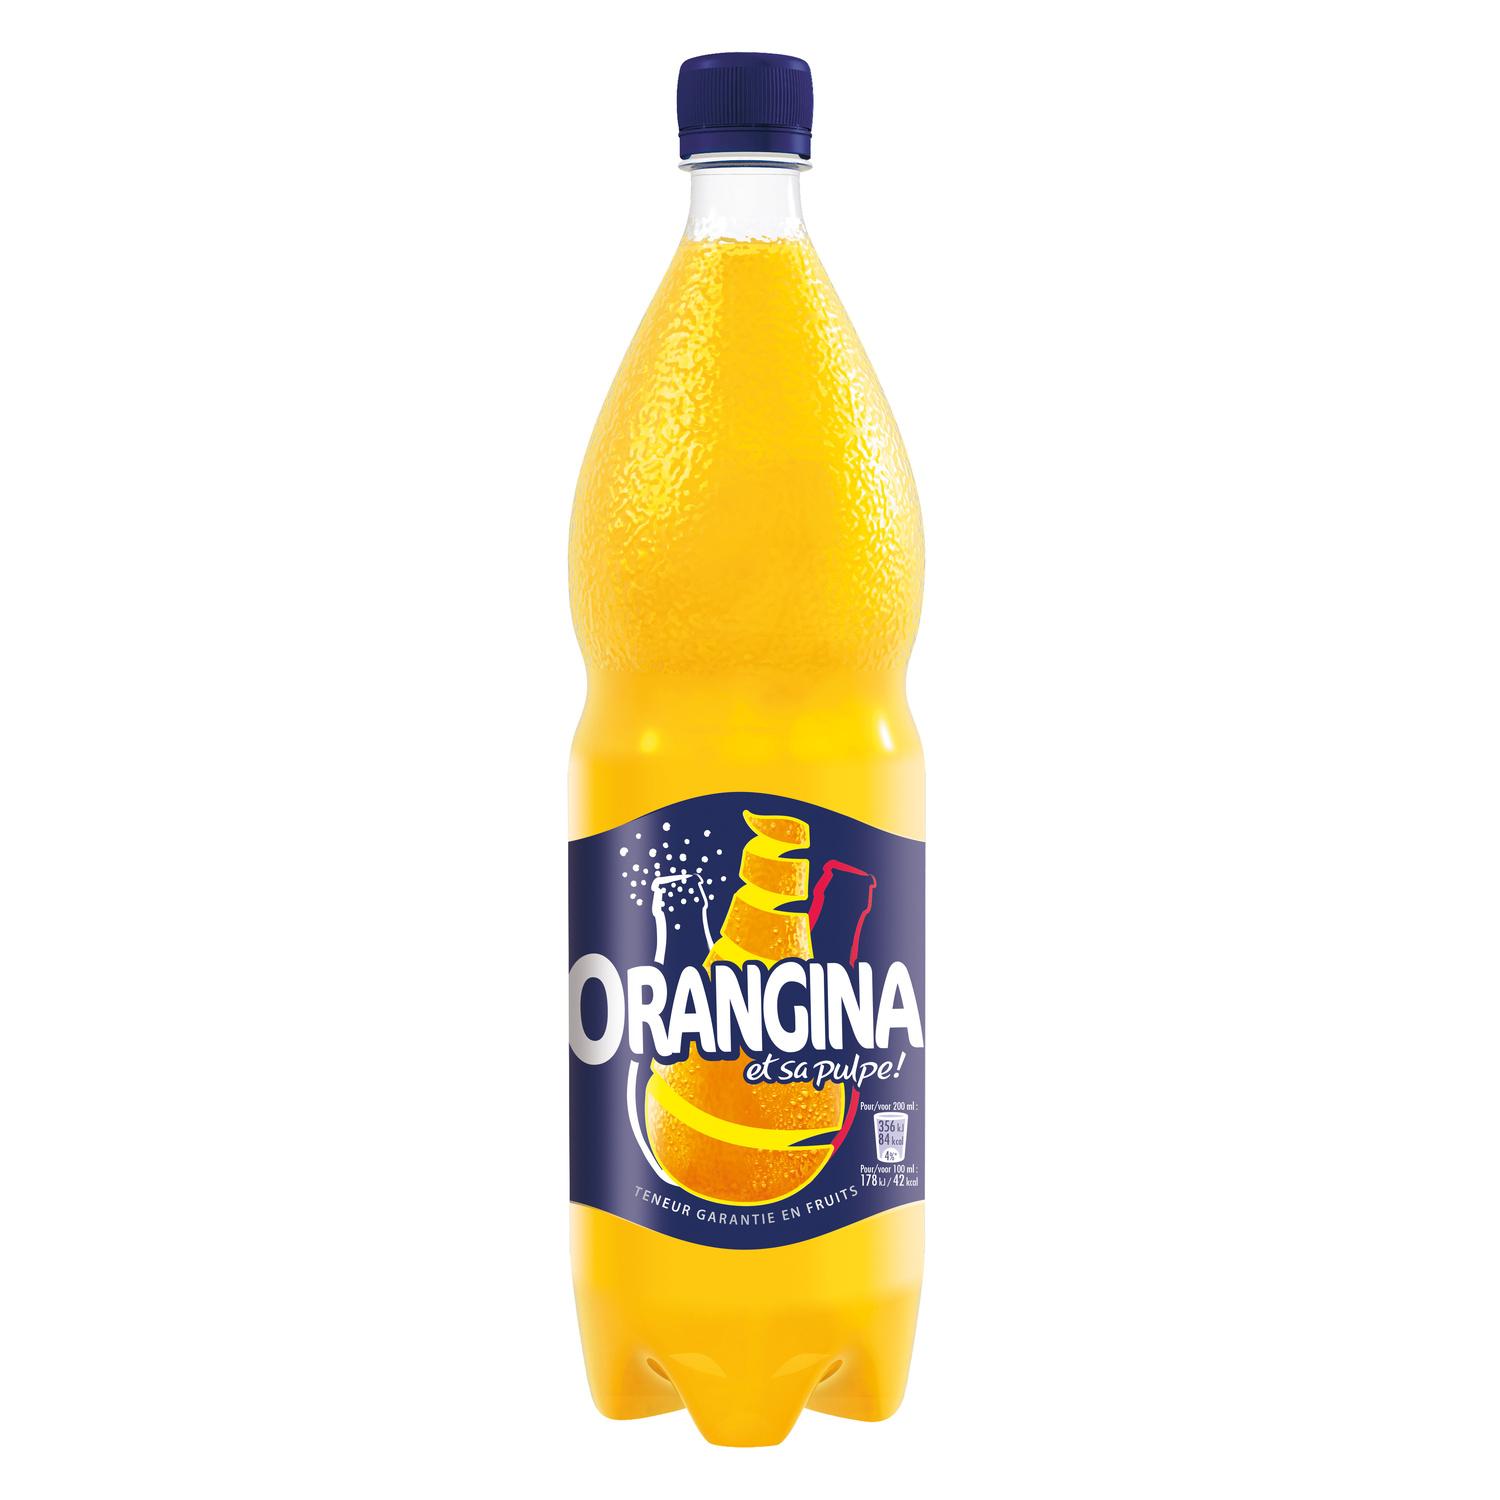 Orange Soda Orangina Buy Online My French Grocery